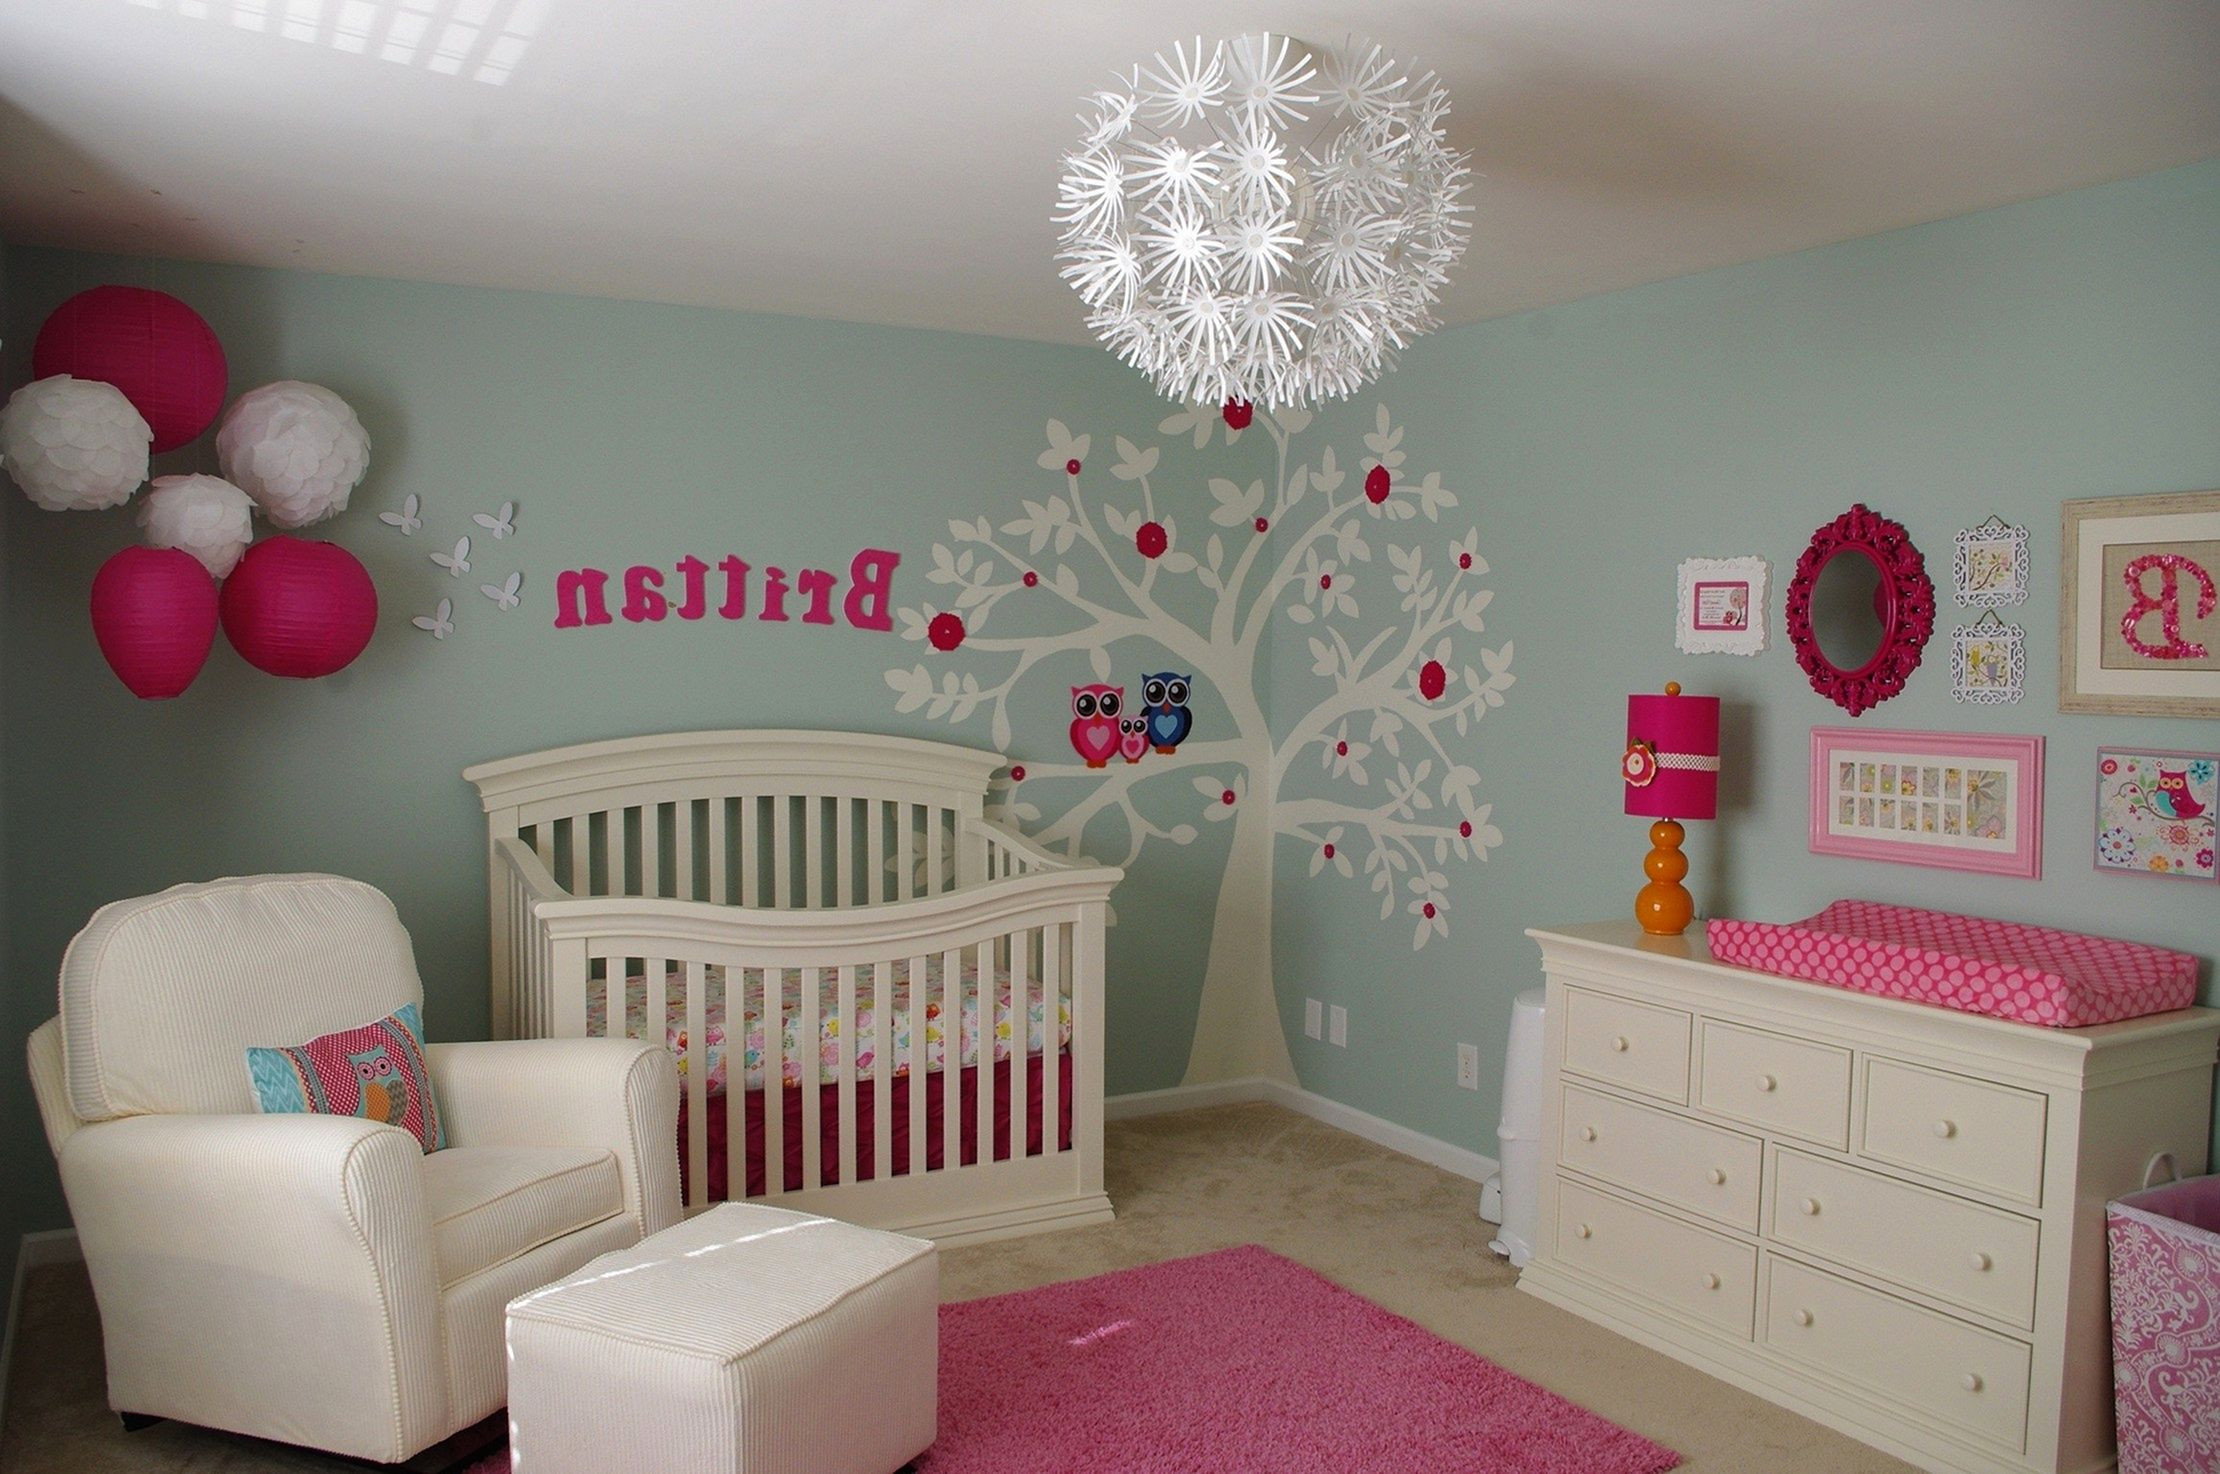 DIY Decor For Girls Room
 DIY Baby Room Decor Ideas For Girls DIY Baby Room Decor